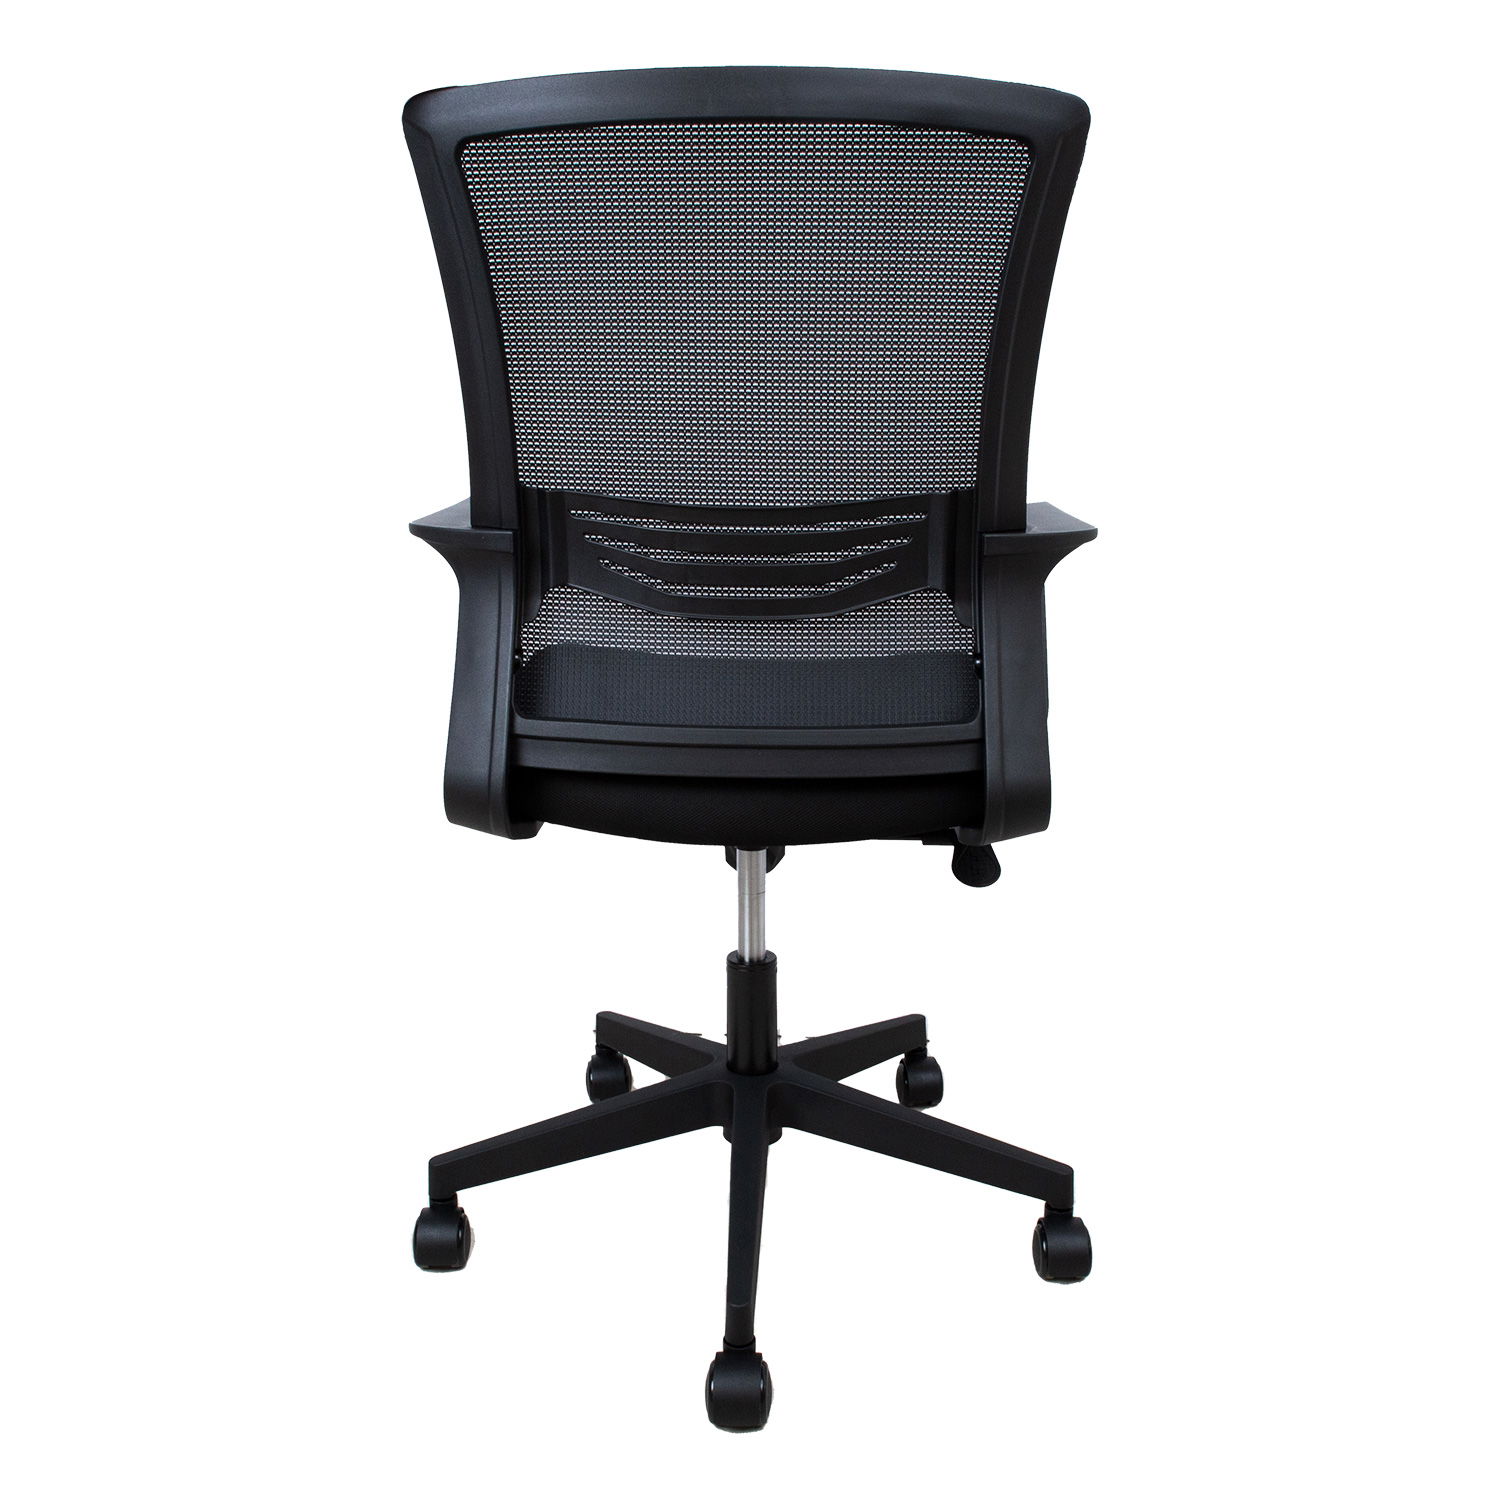 Biuro kėdė EMMA, 57x65x98-104 cm, juoda - 4